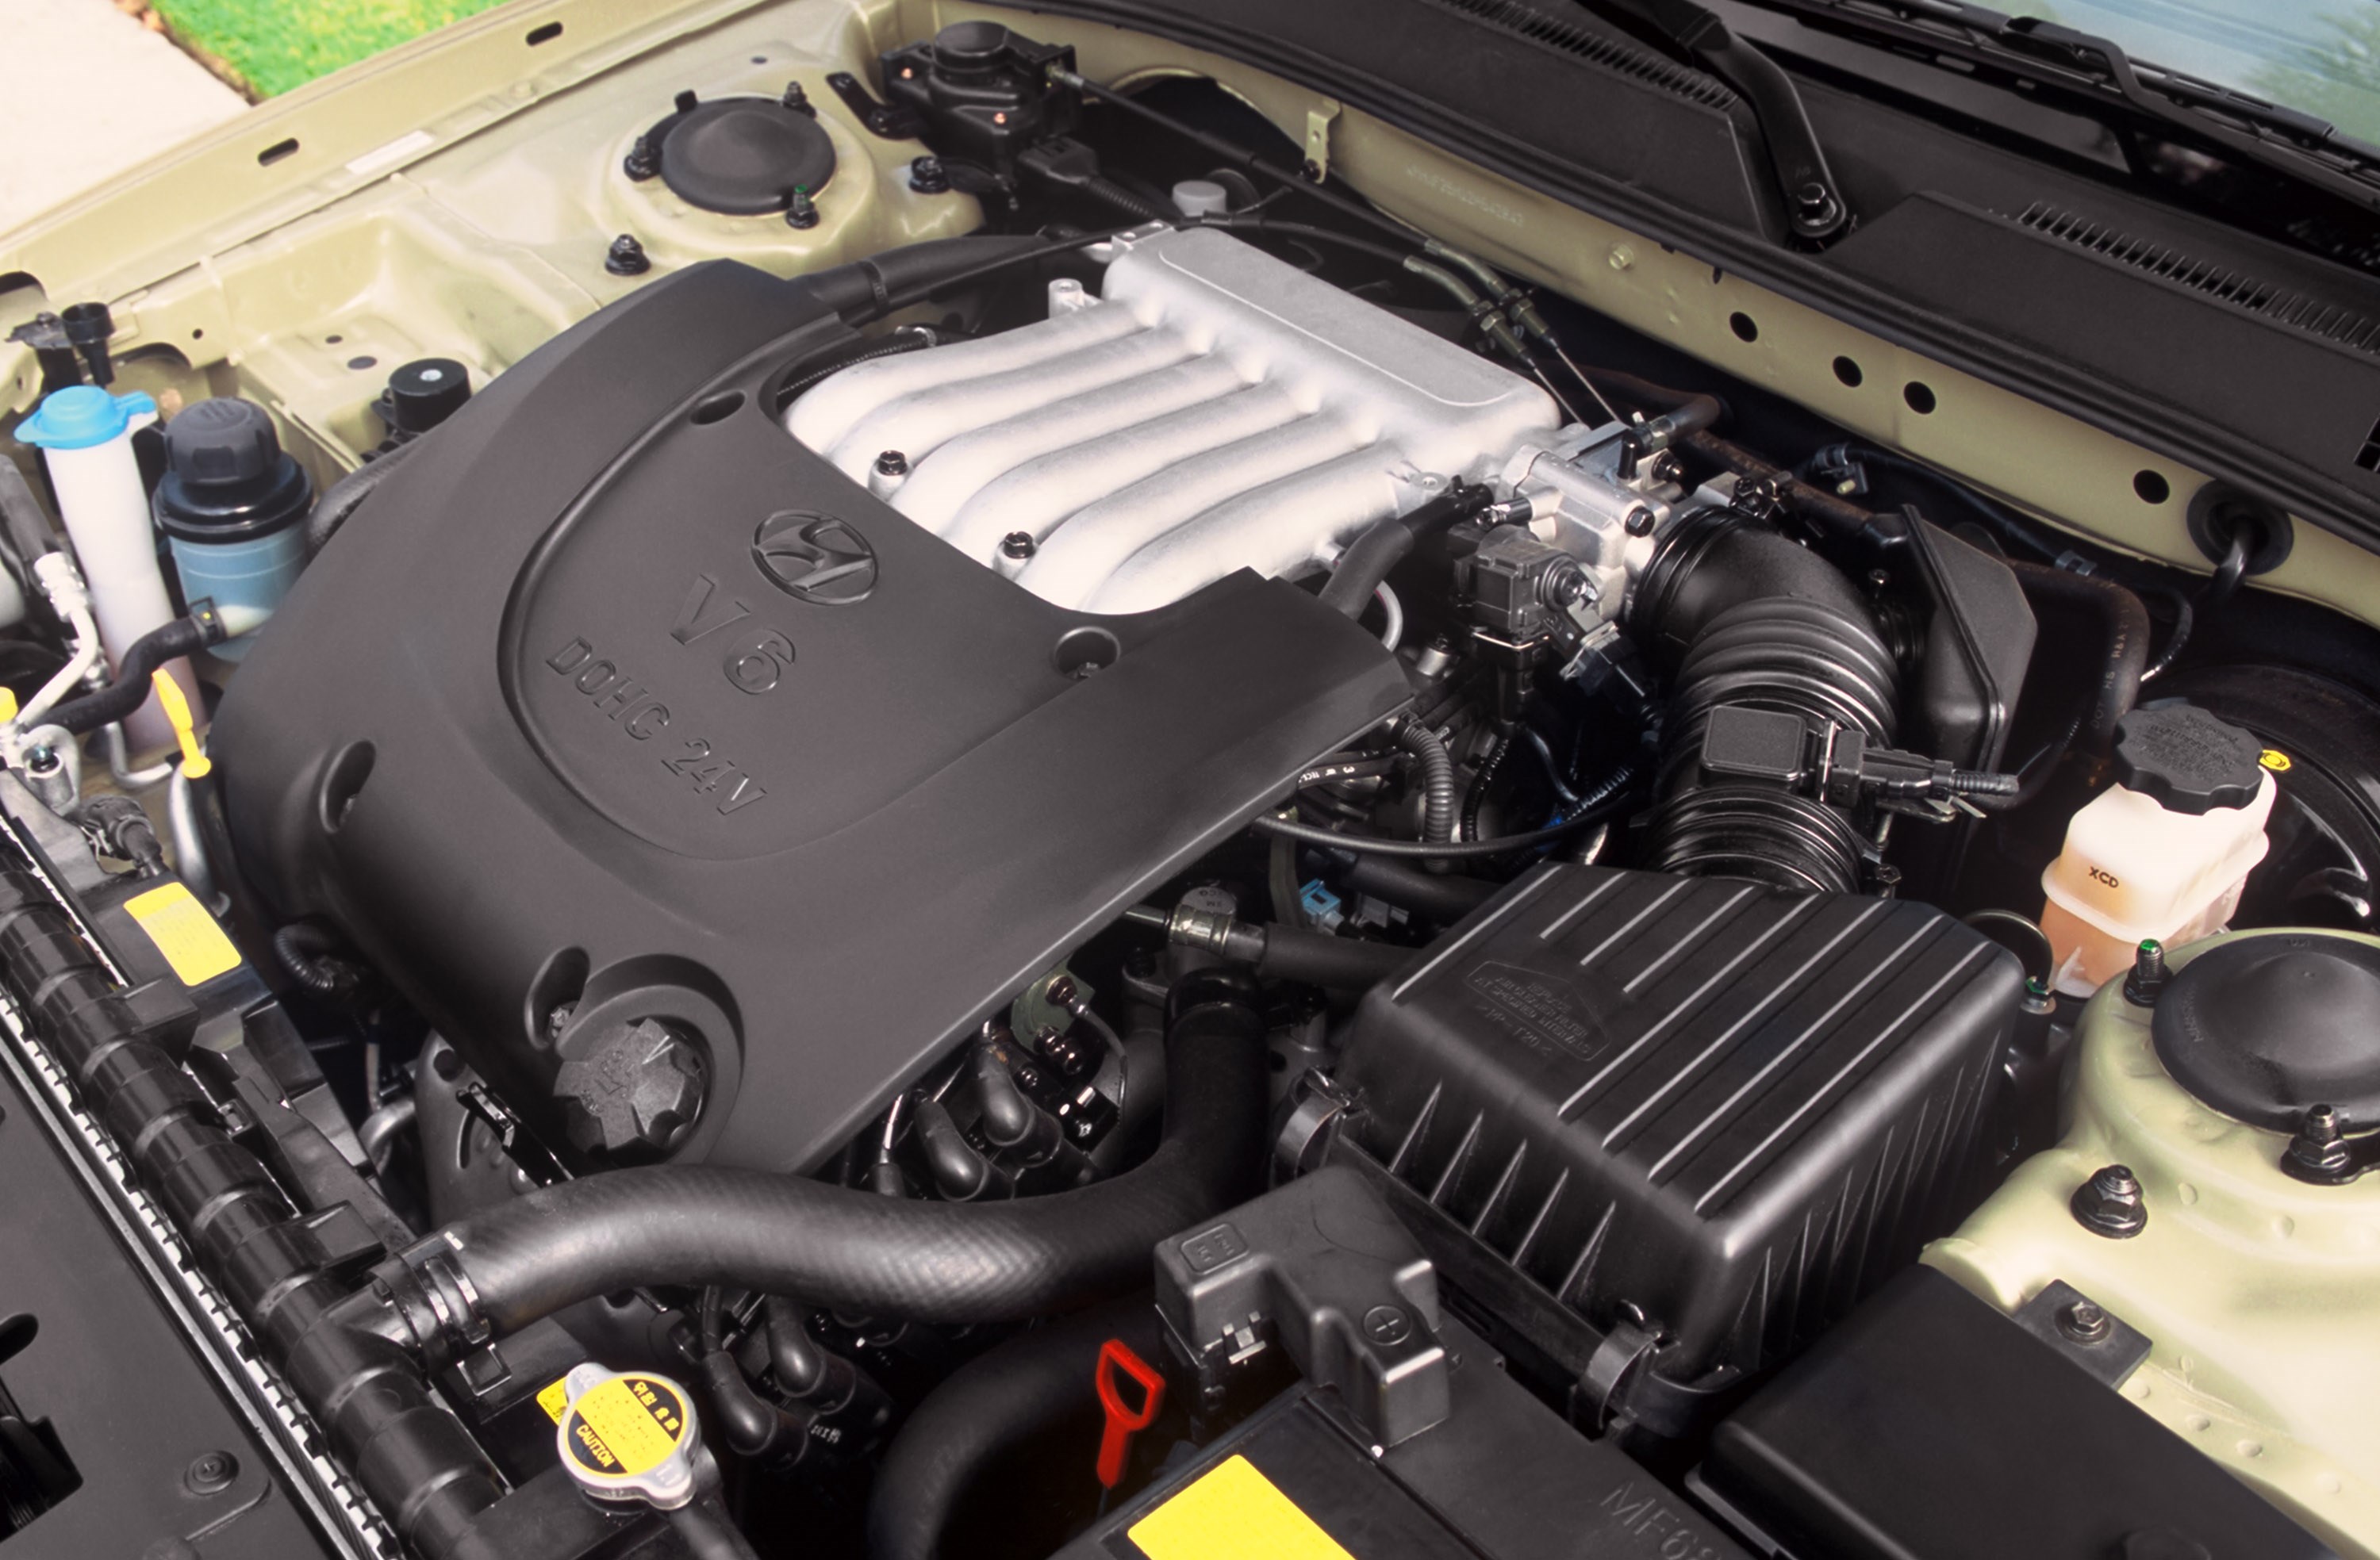 Ресурс цепи ГРМ в двигателе Hyundai Sonata NF